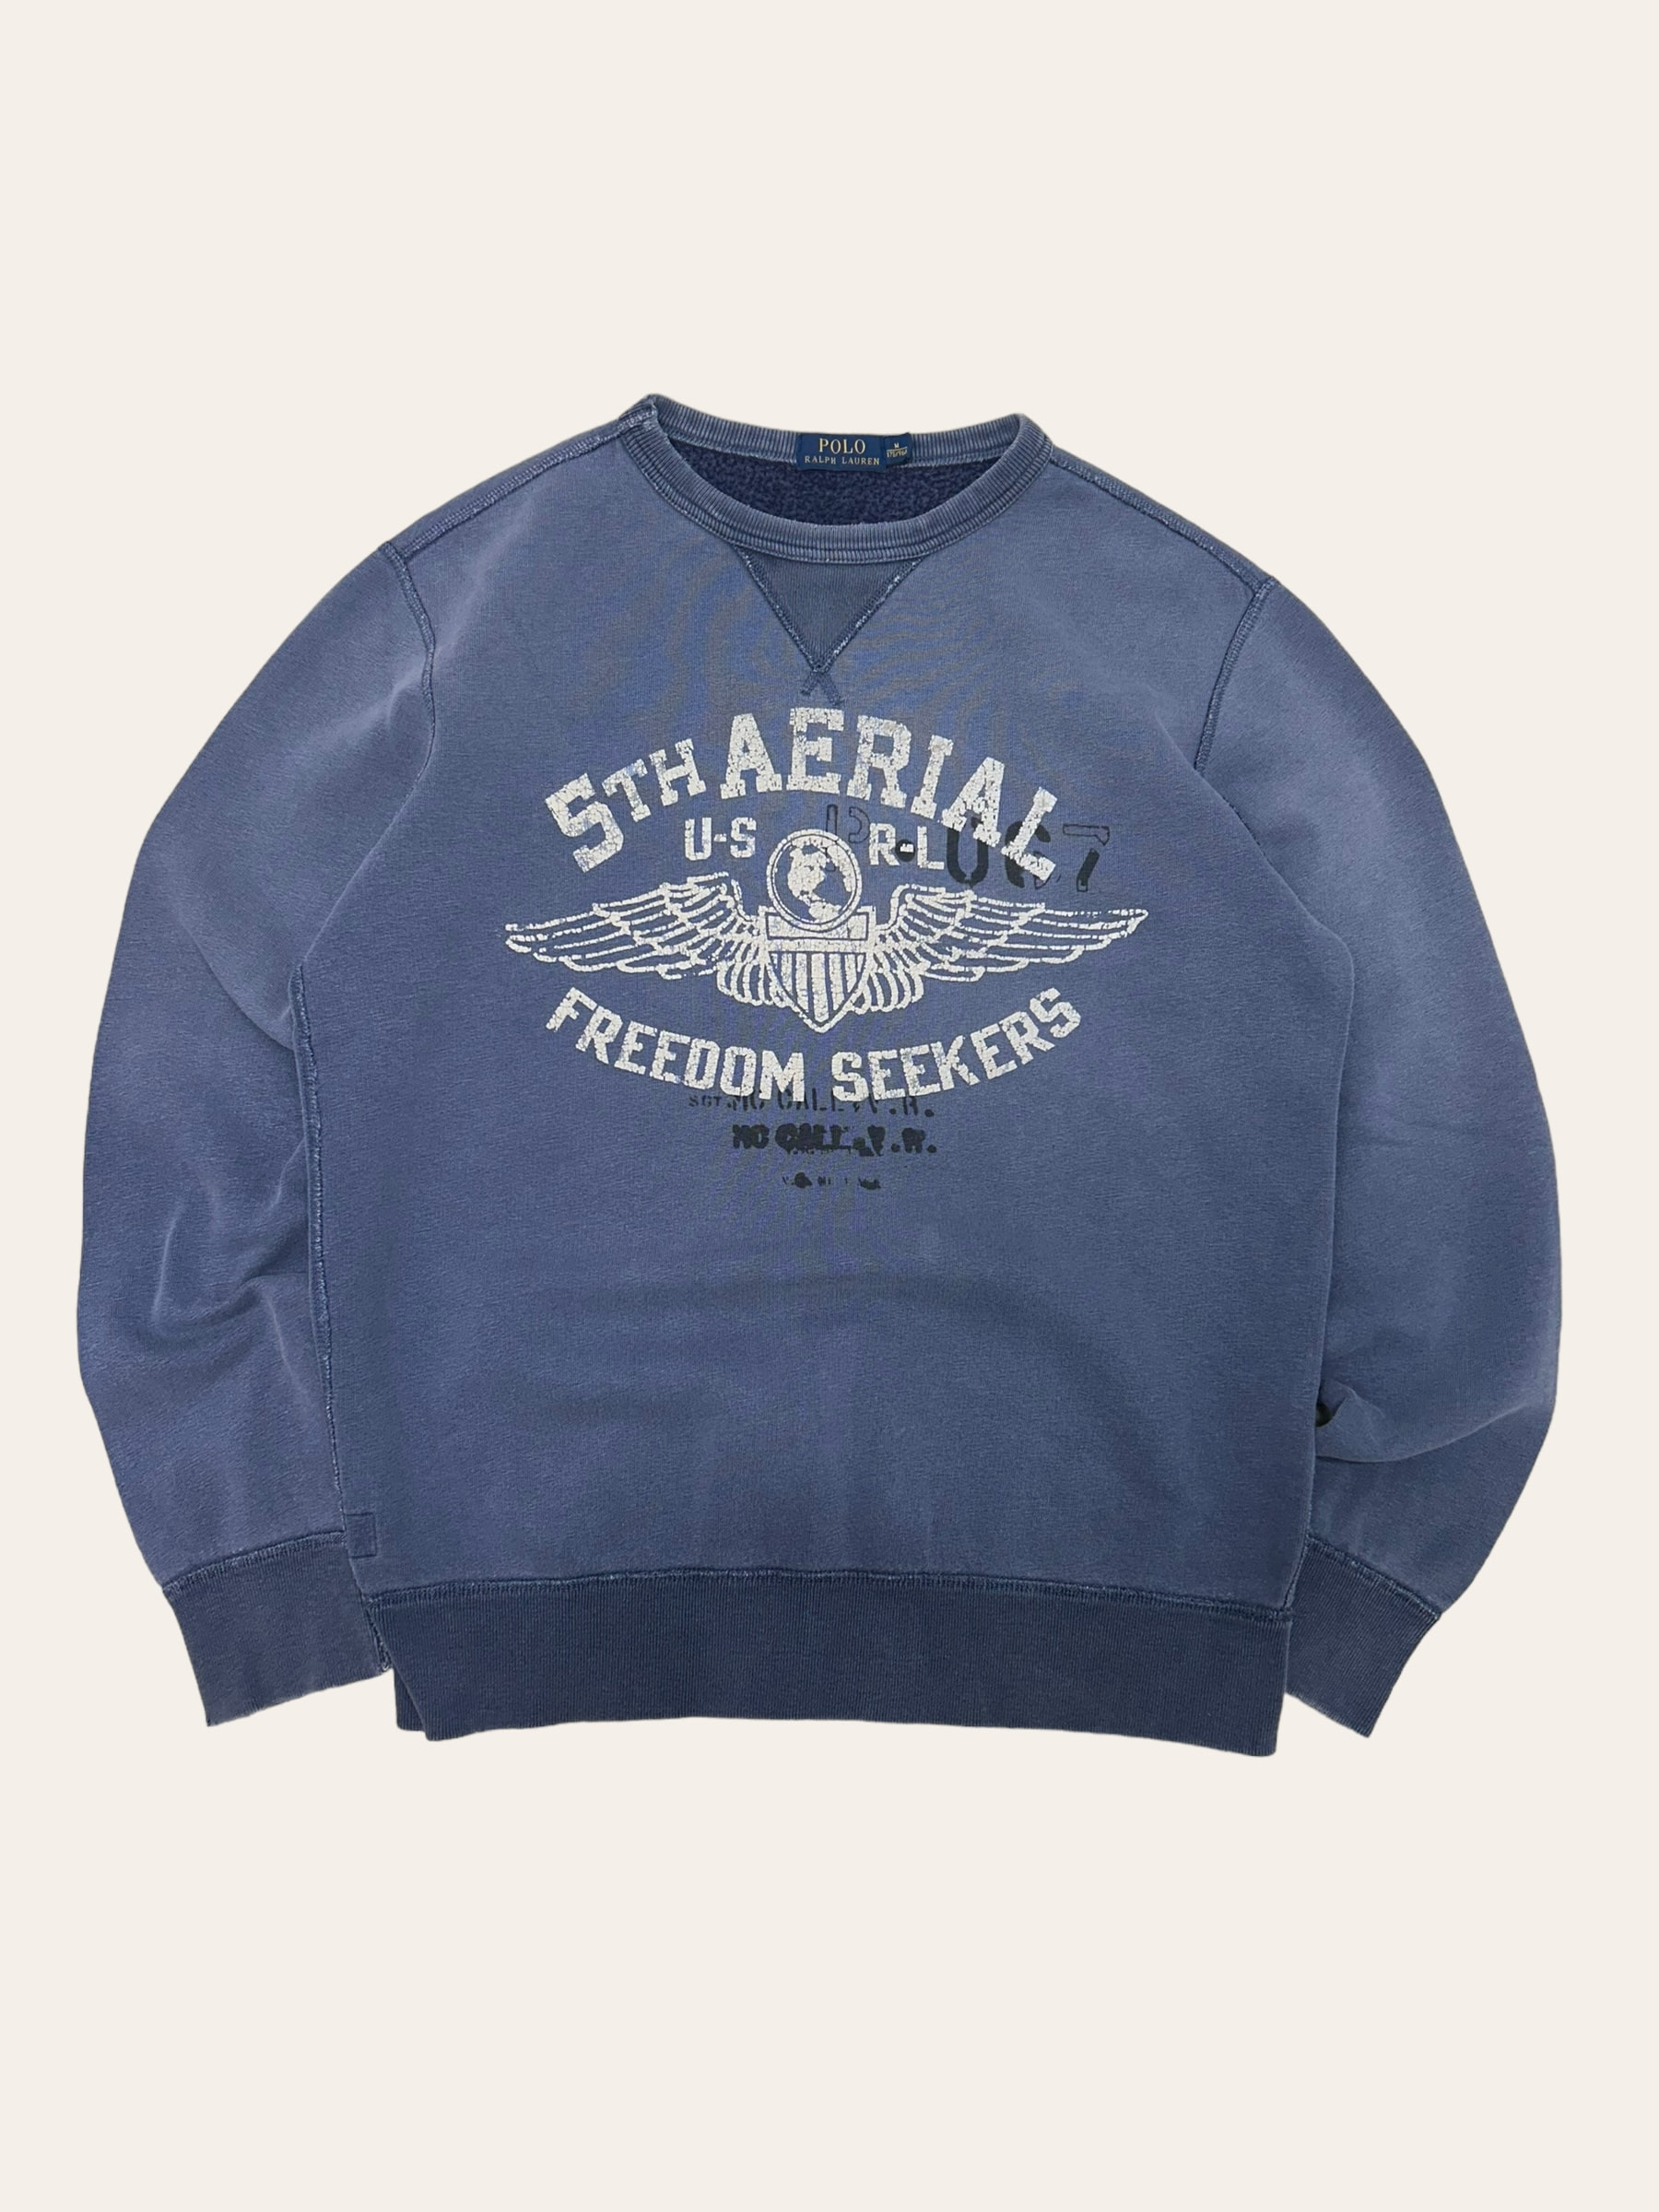 Polo ralph lauren faded blue military printing sweatshirt M